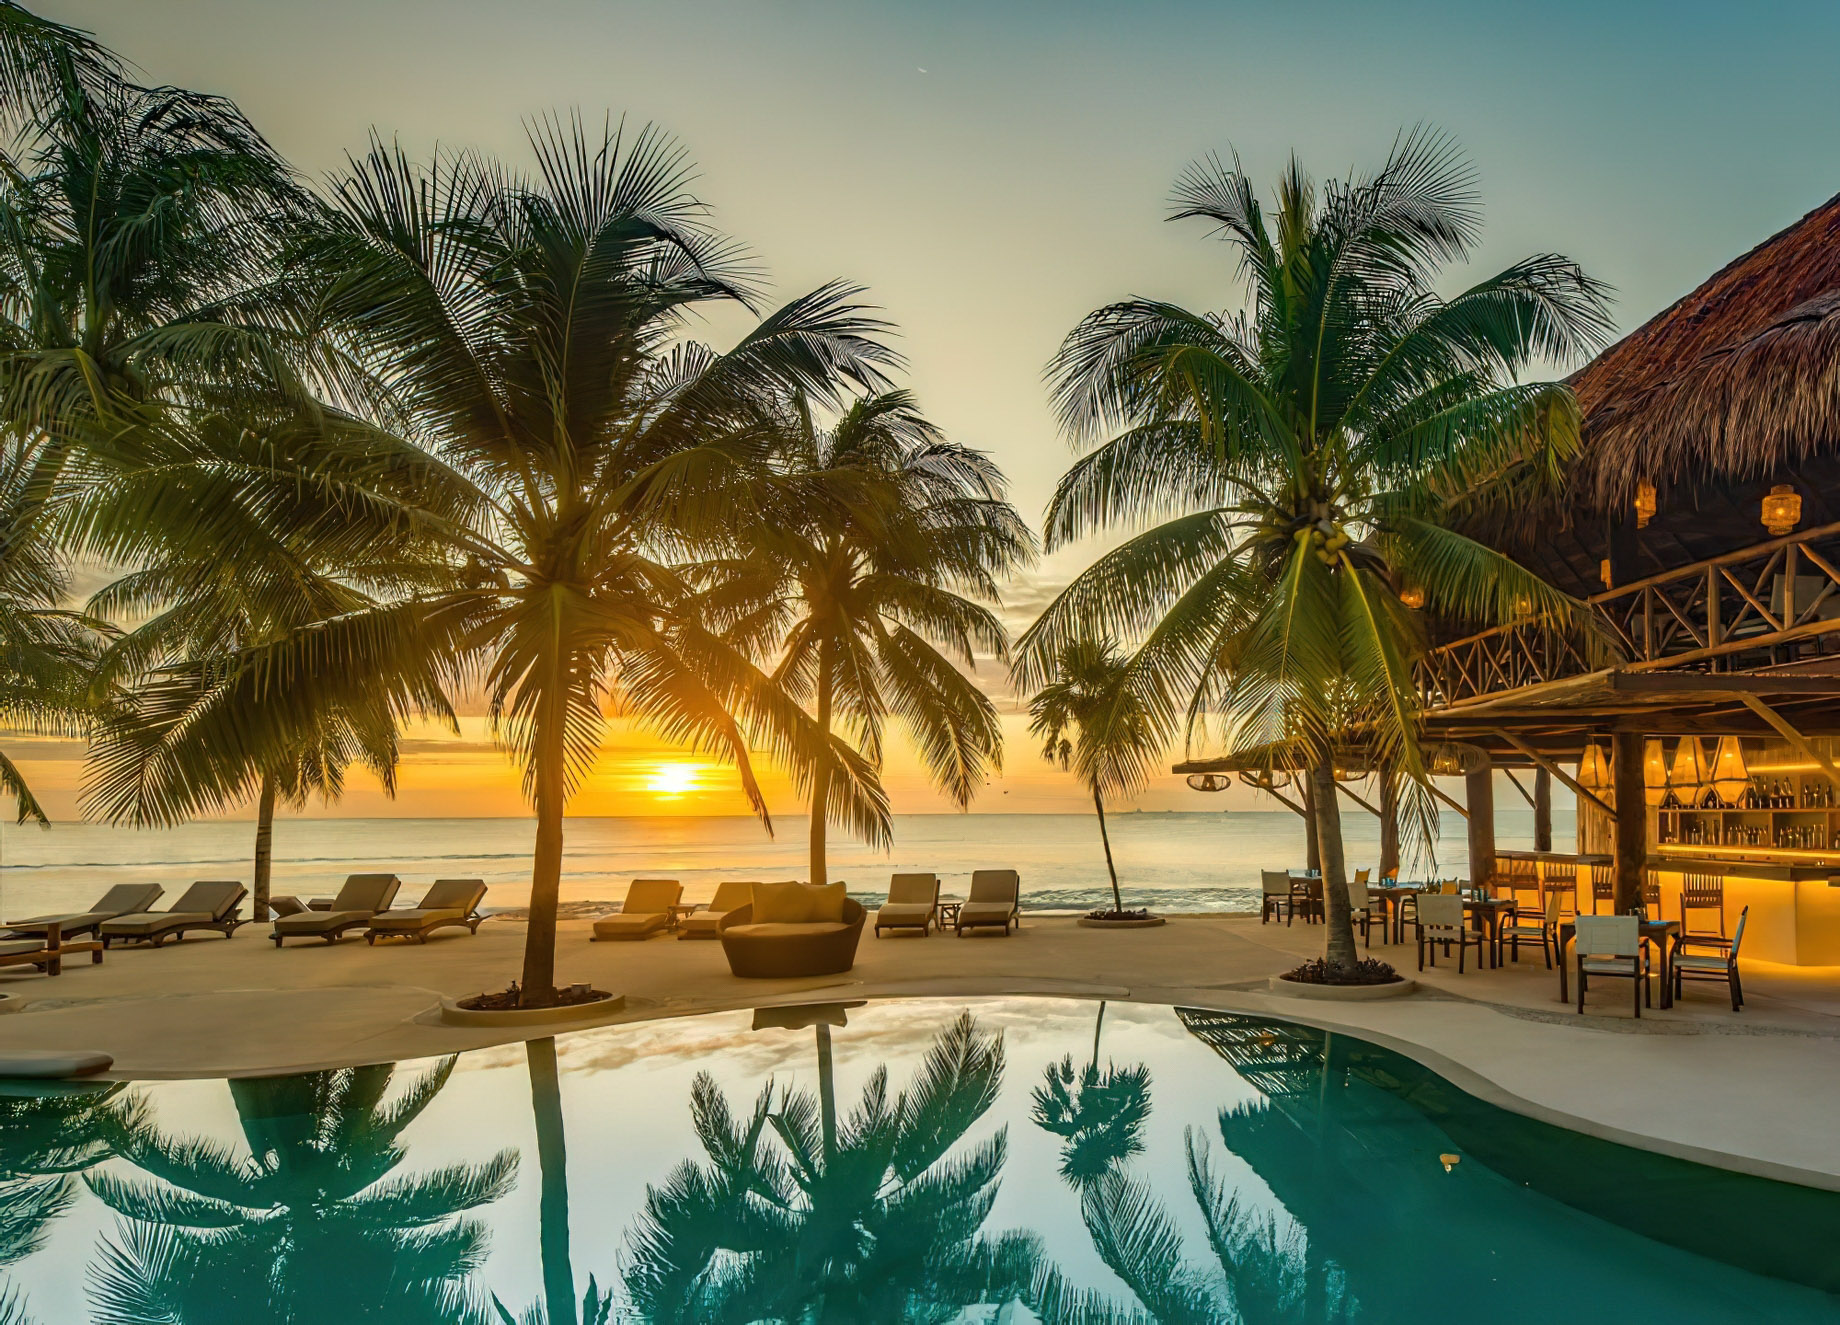 Viceroy Riviera Maya Resort - Playa del Carmen, Mexico - Pool Sunset